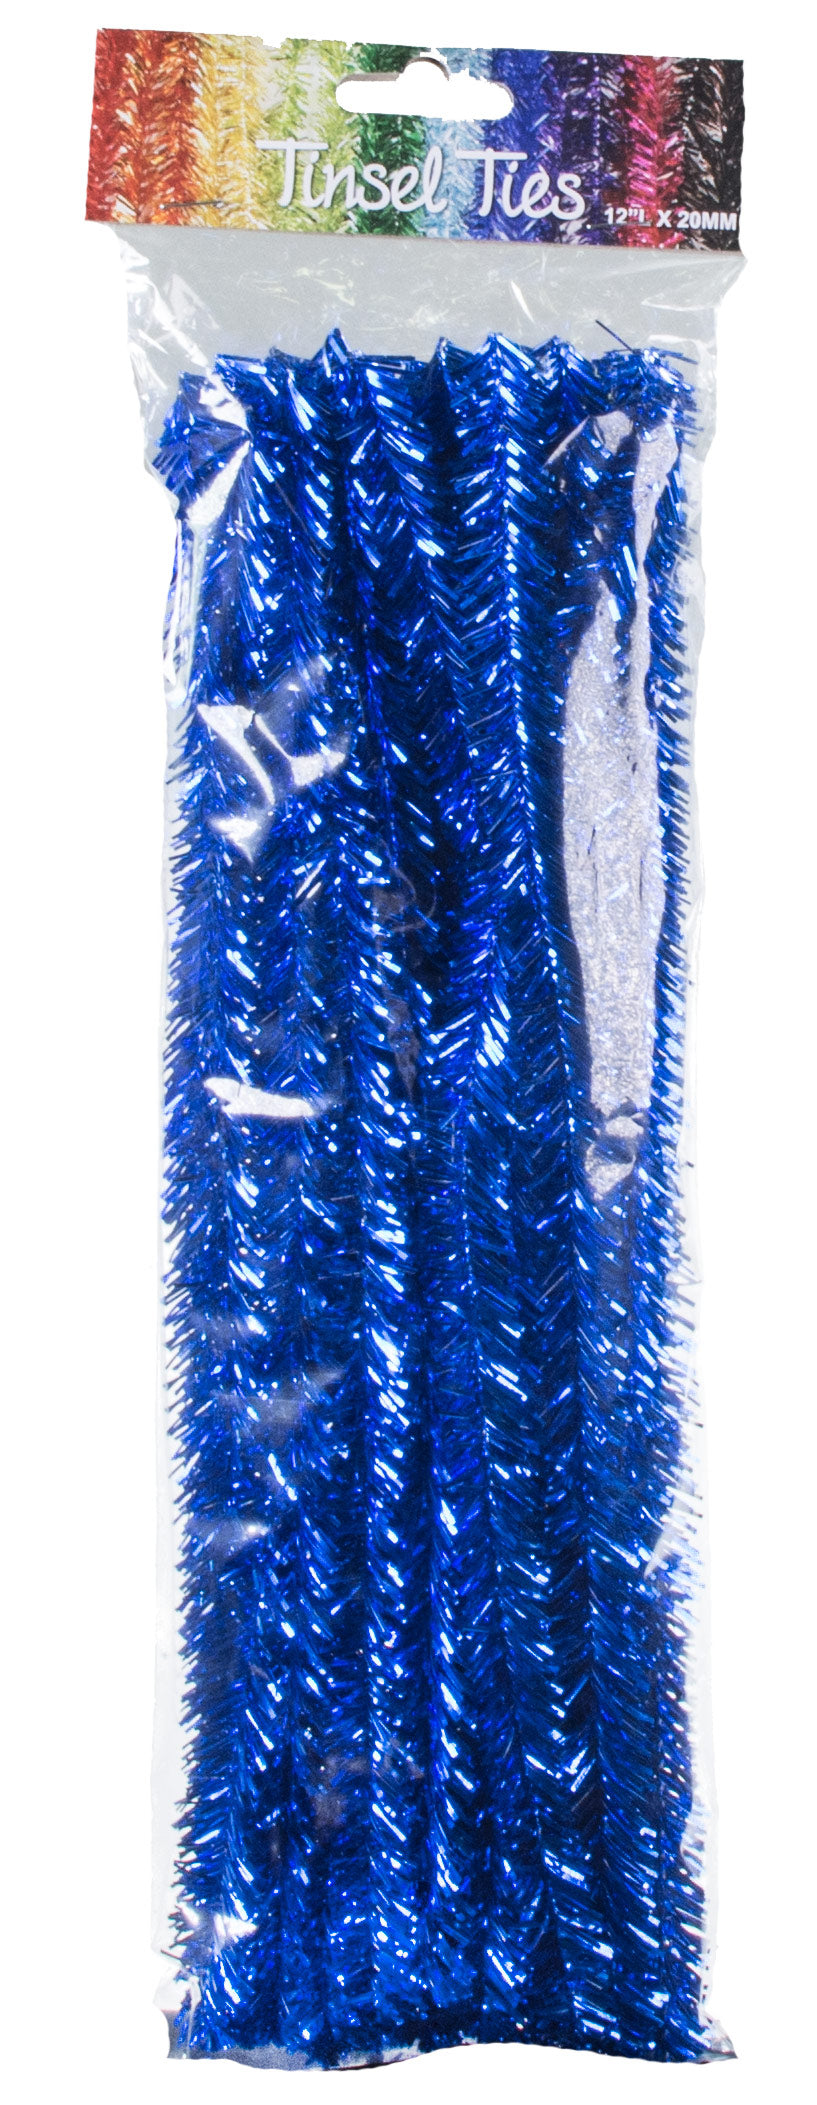 20mm Tinsel Tie Stems: Metallic Royal Blue (25)